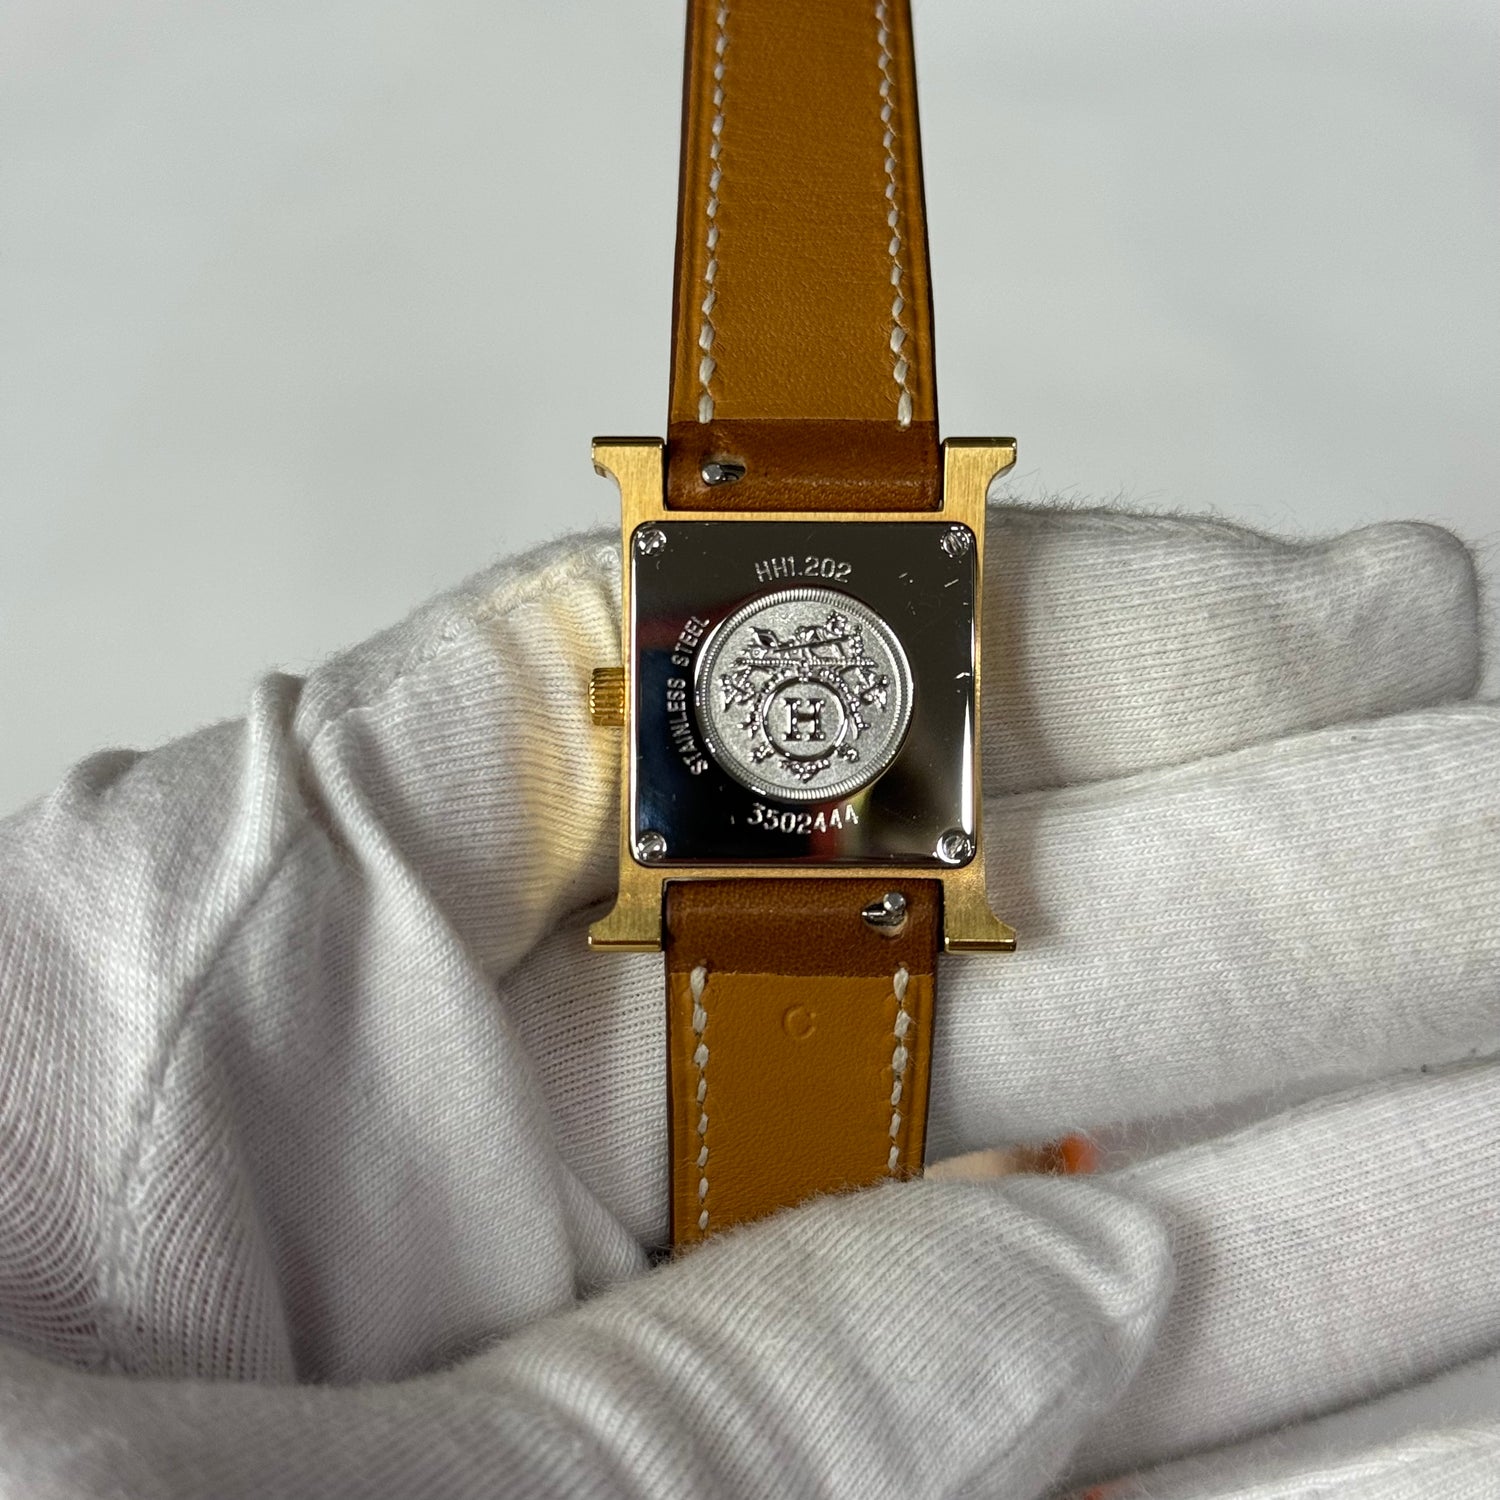 Hermès - H hour diamond index watch